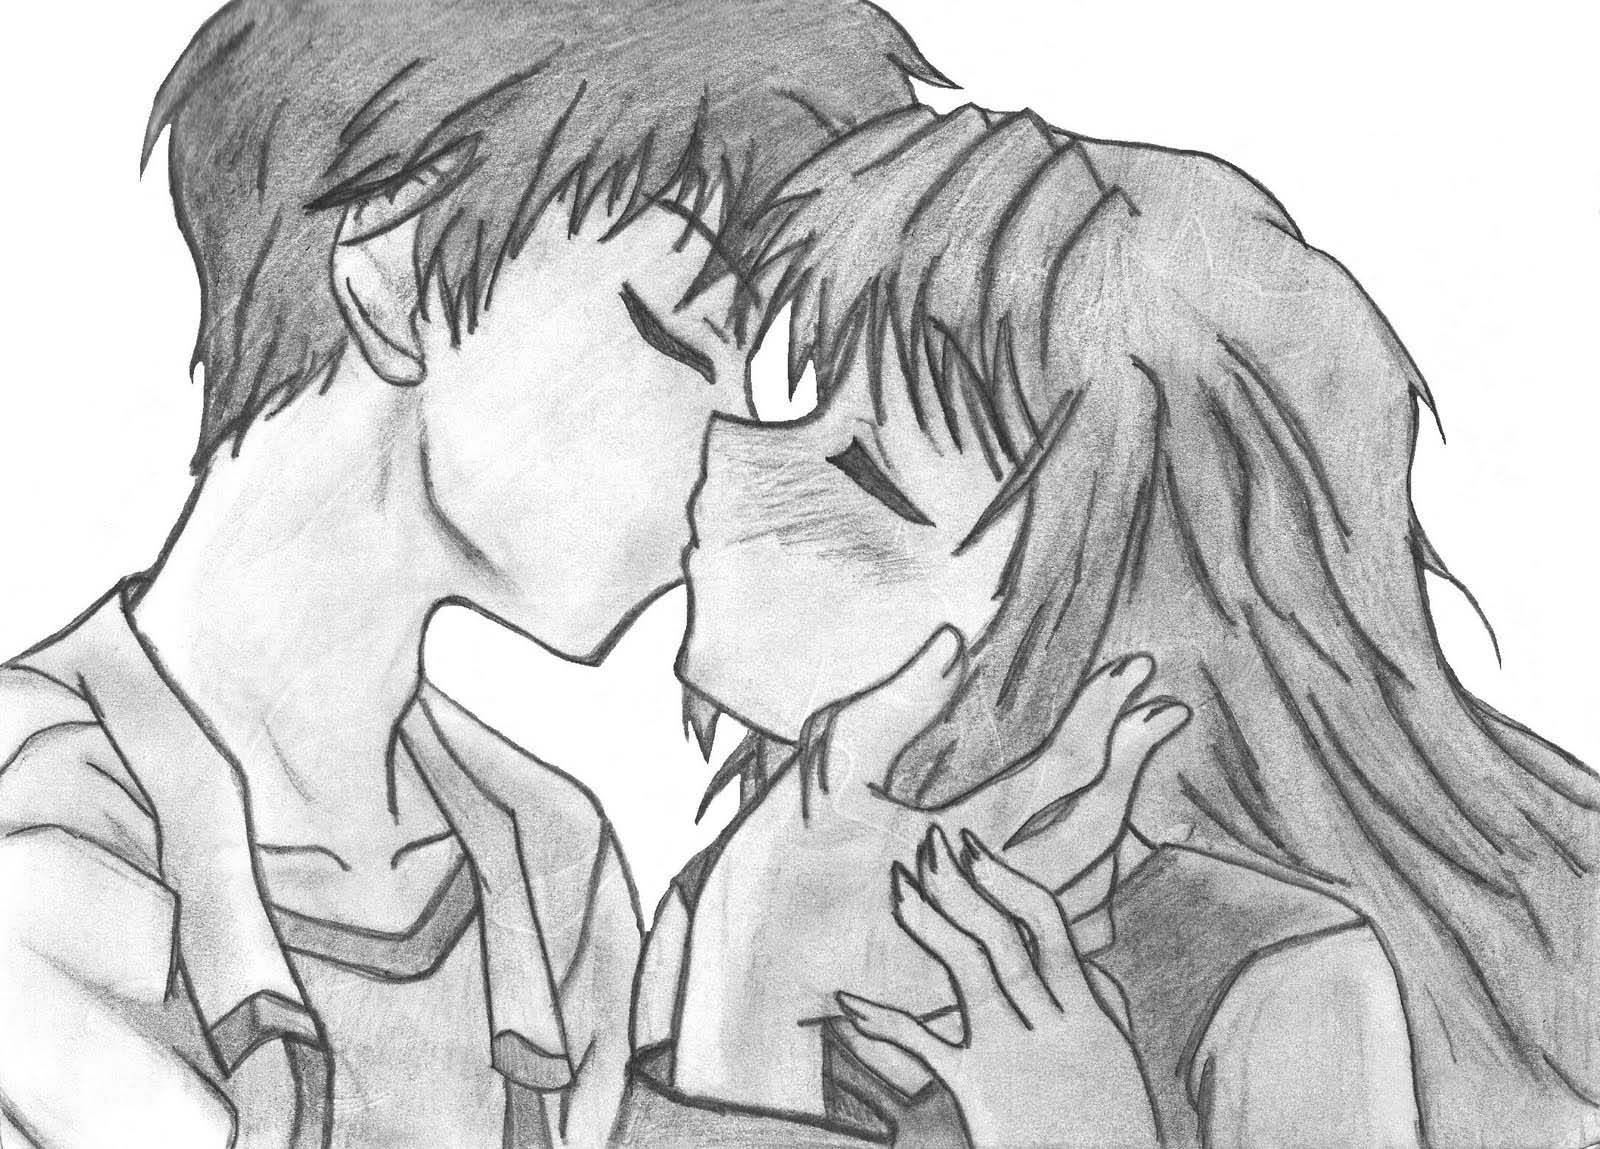 http://3.bp.blogspot.com/-_n0hTiPT8TM/TrPVVlzdSHI/AAAAAAAAEBw/rCxZaWY32PY/s1600/anime-kiss.jpg